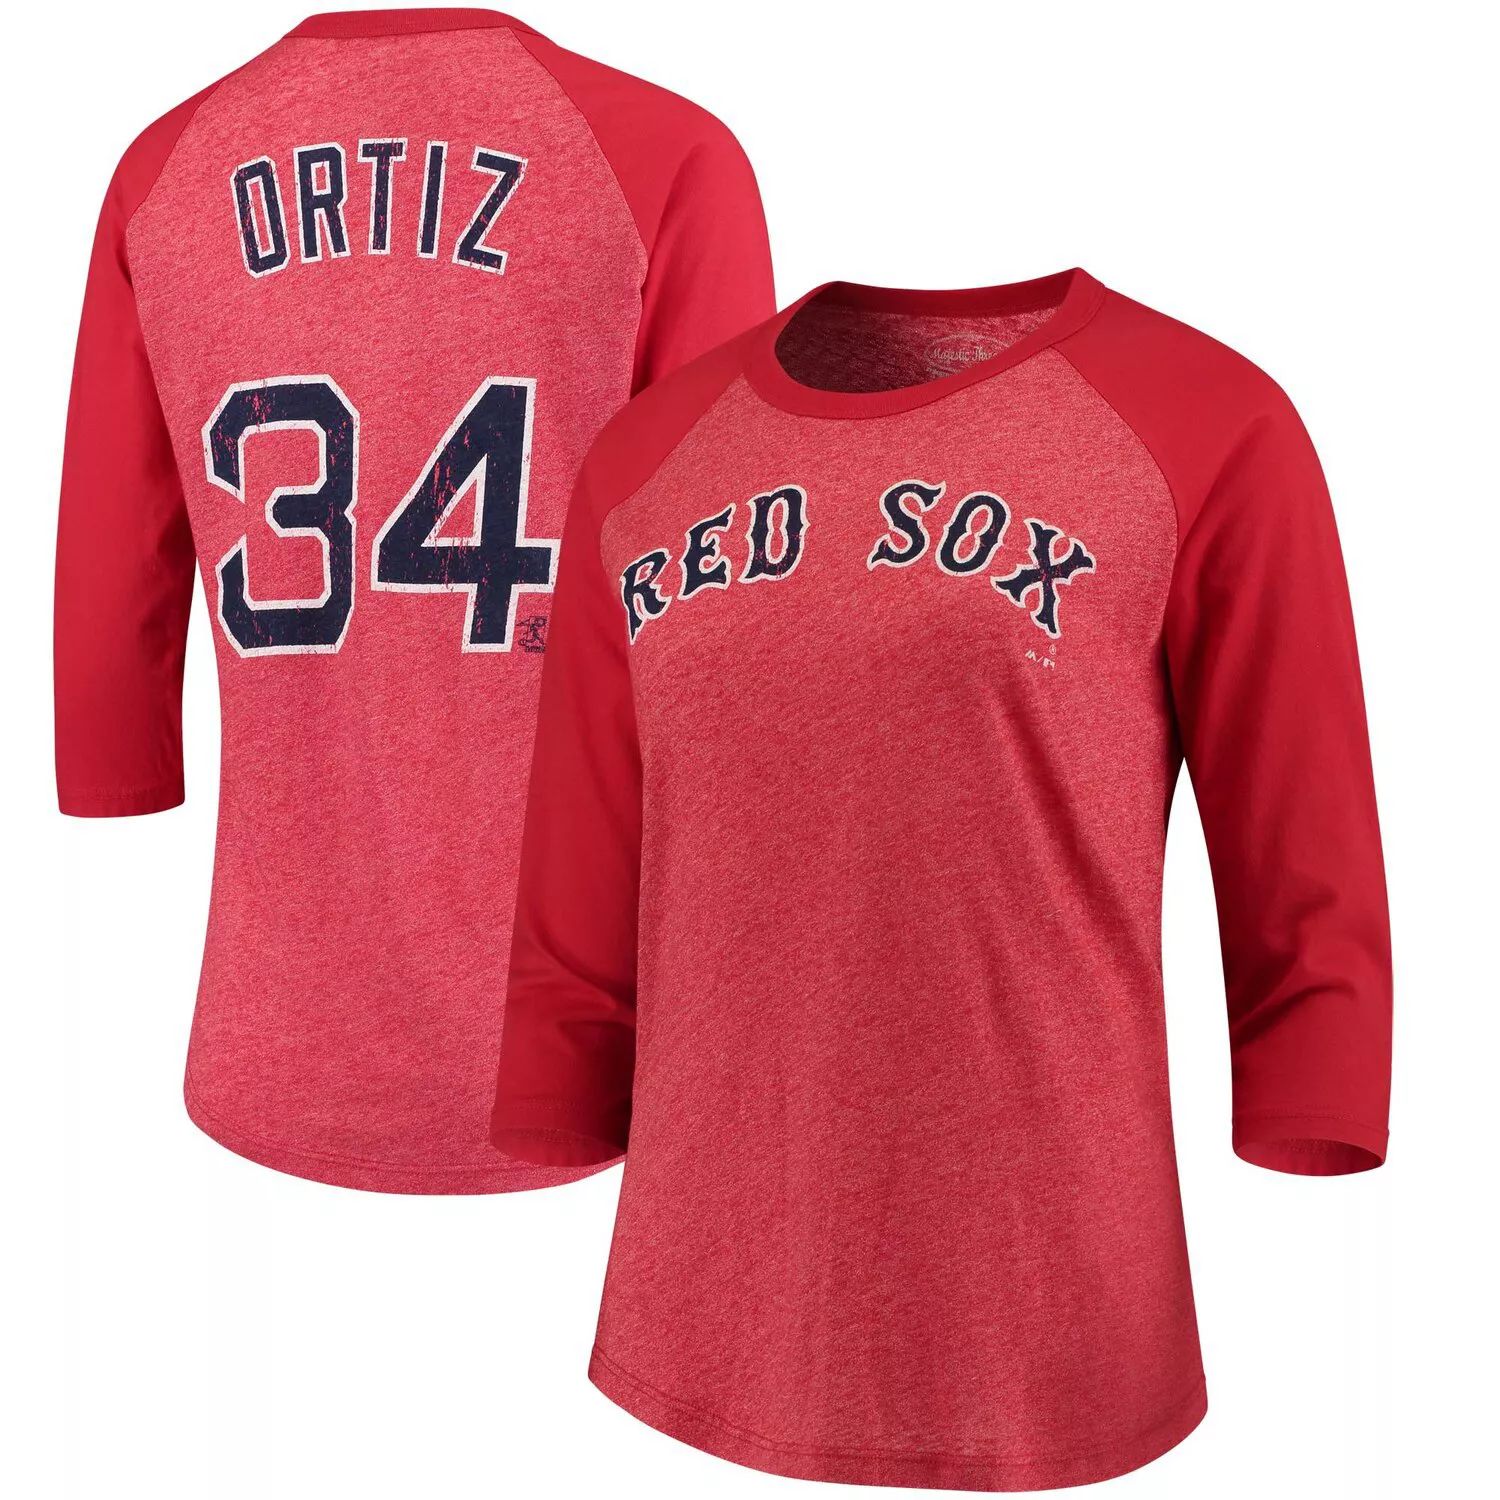 Женская футболка Majestic Threads David Ortiz Red Boston Red Sox, футболка Tri-Blend длиной три четверти с именем и номером реглан Majestic цена и фото